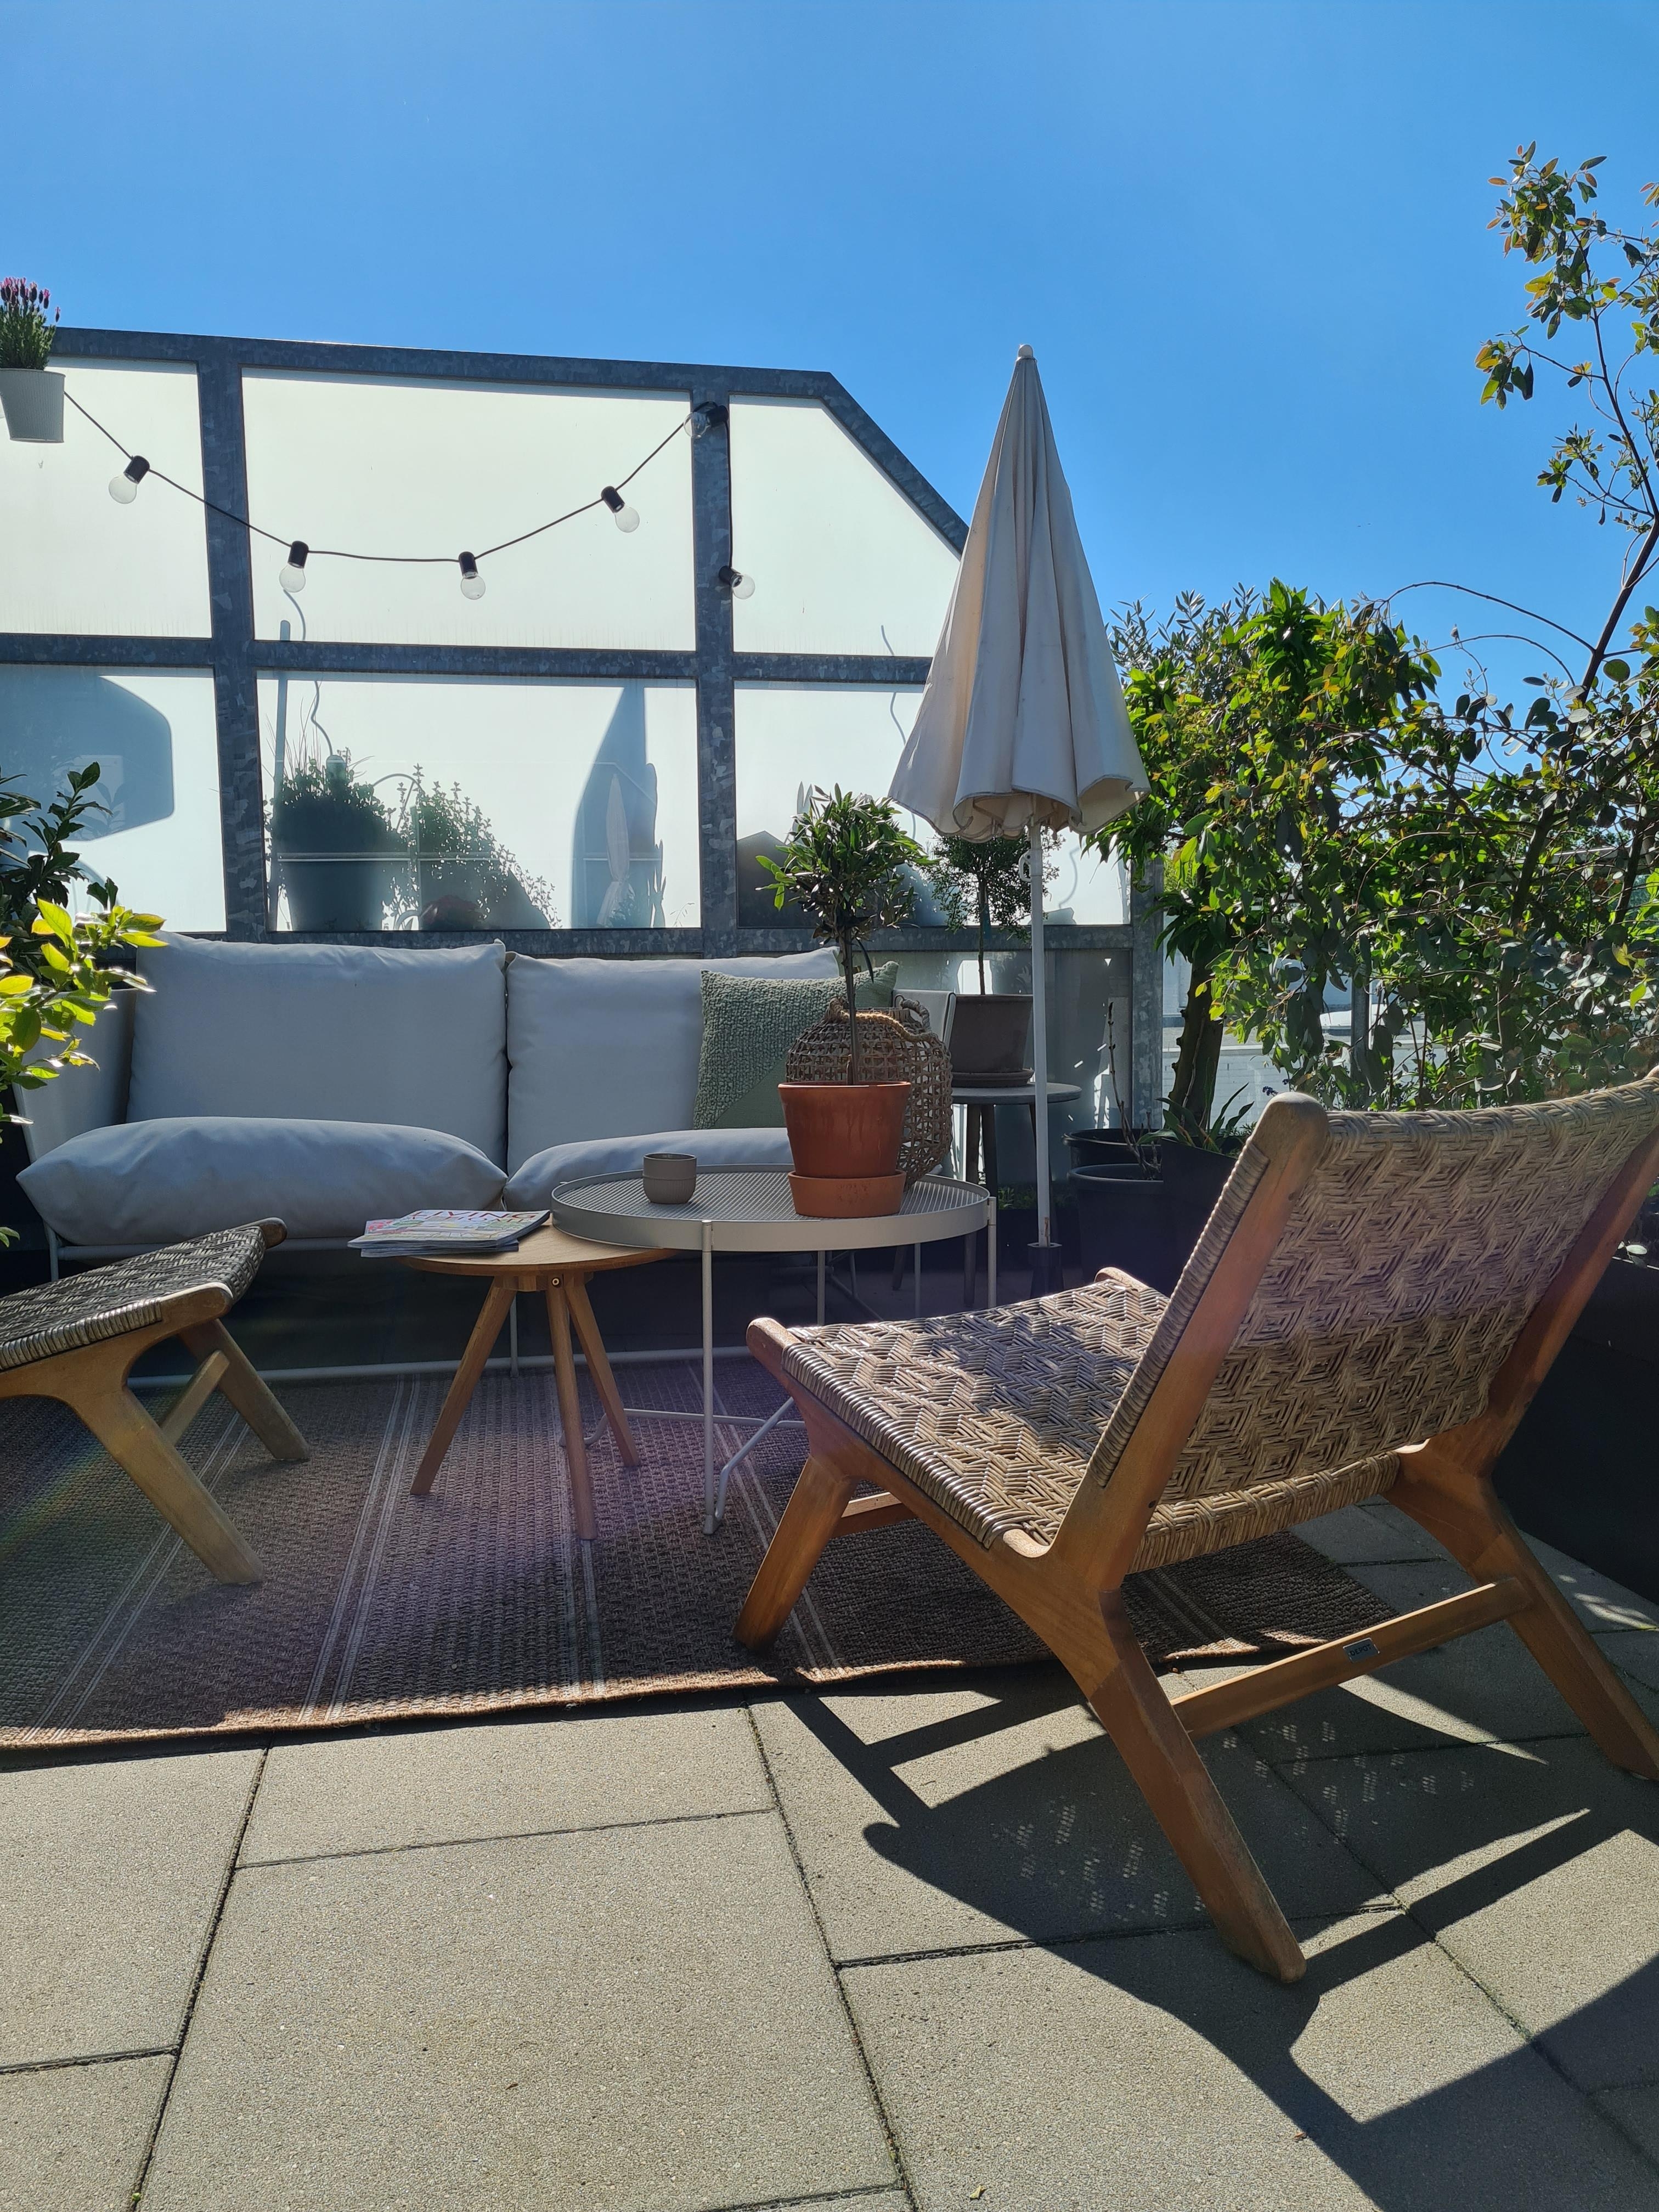 Outdoorliebe
#outdoorliving #outdoorlivingroom #terrasse #dachterrasse #apartmenttherapy 